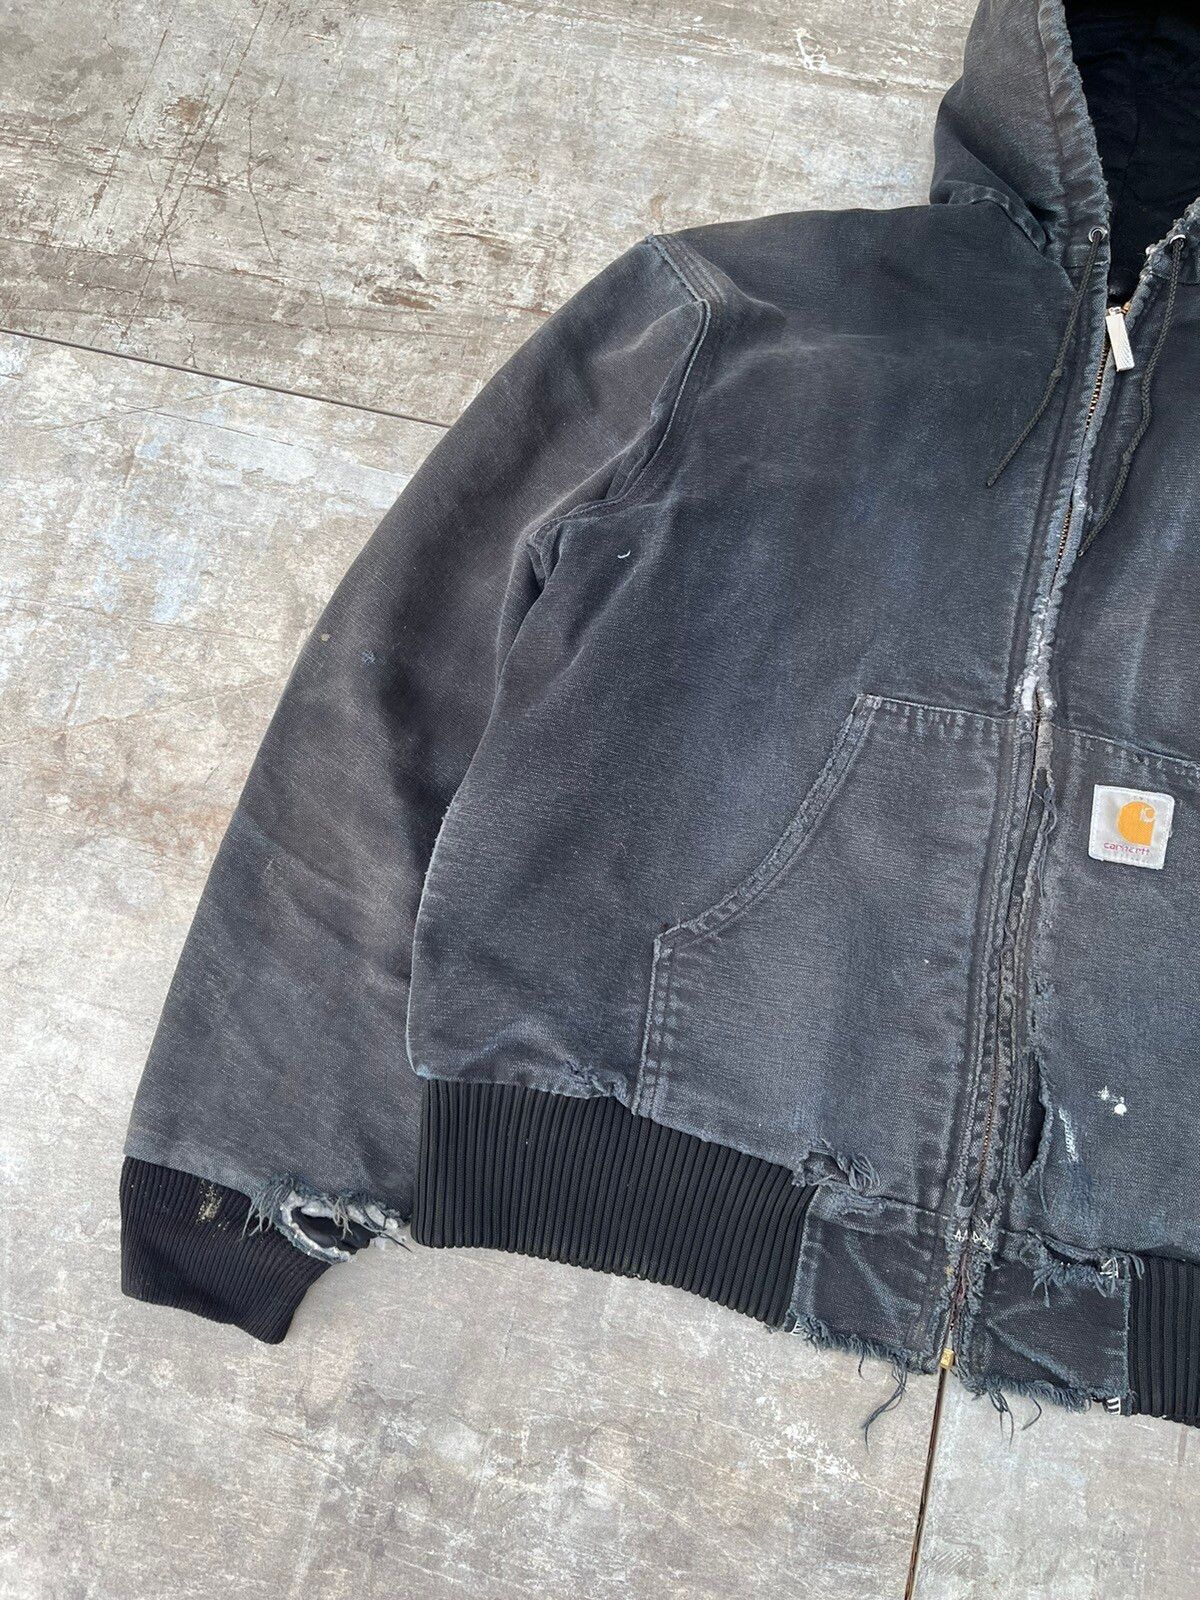 Vintage Vintage 90s Faded Black Carhartt Work Jacket Size US L / EU 52-54 / 3 - 3 Thumbnail